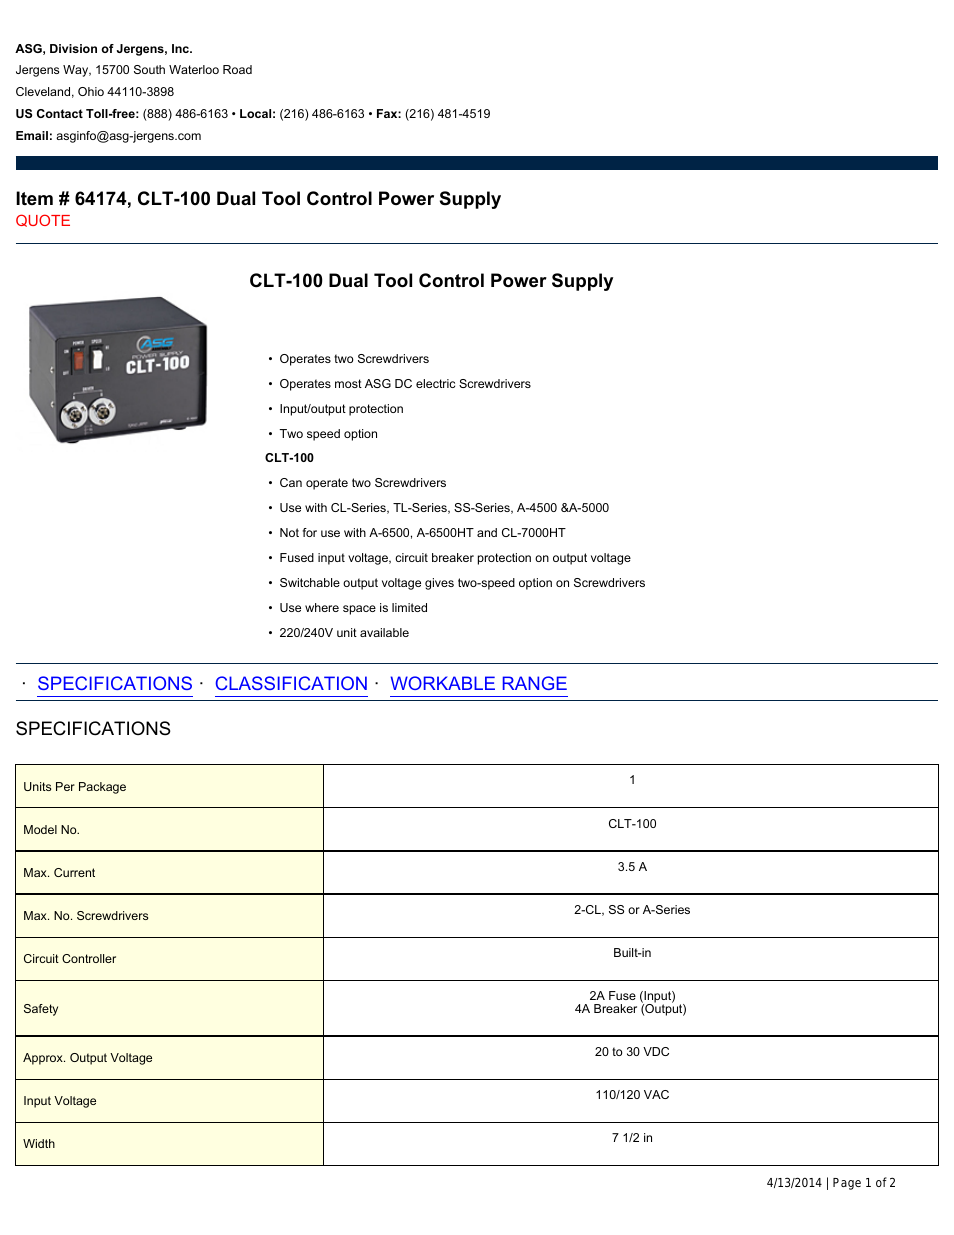 64174 CLT-100 Dual Tool Control Power Supply